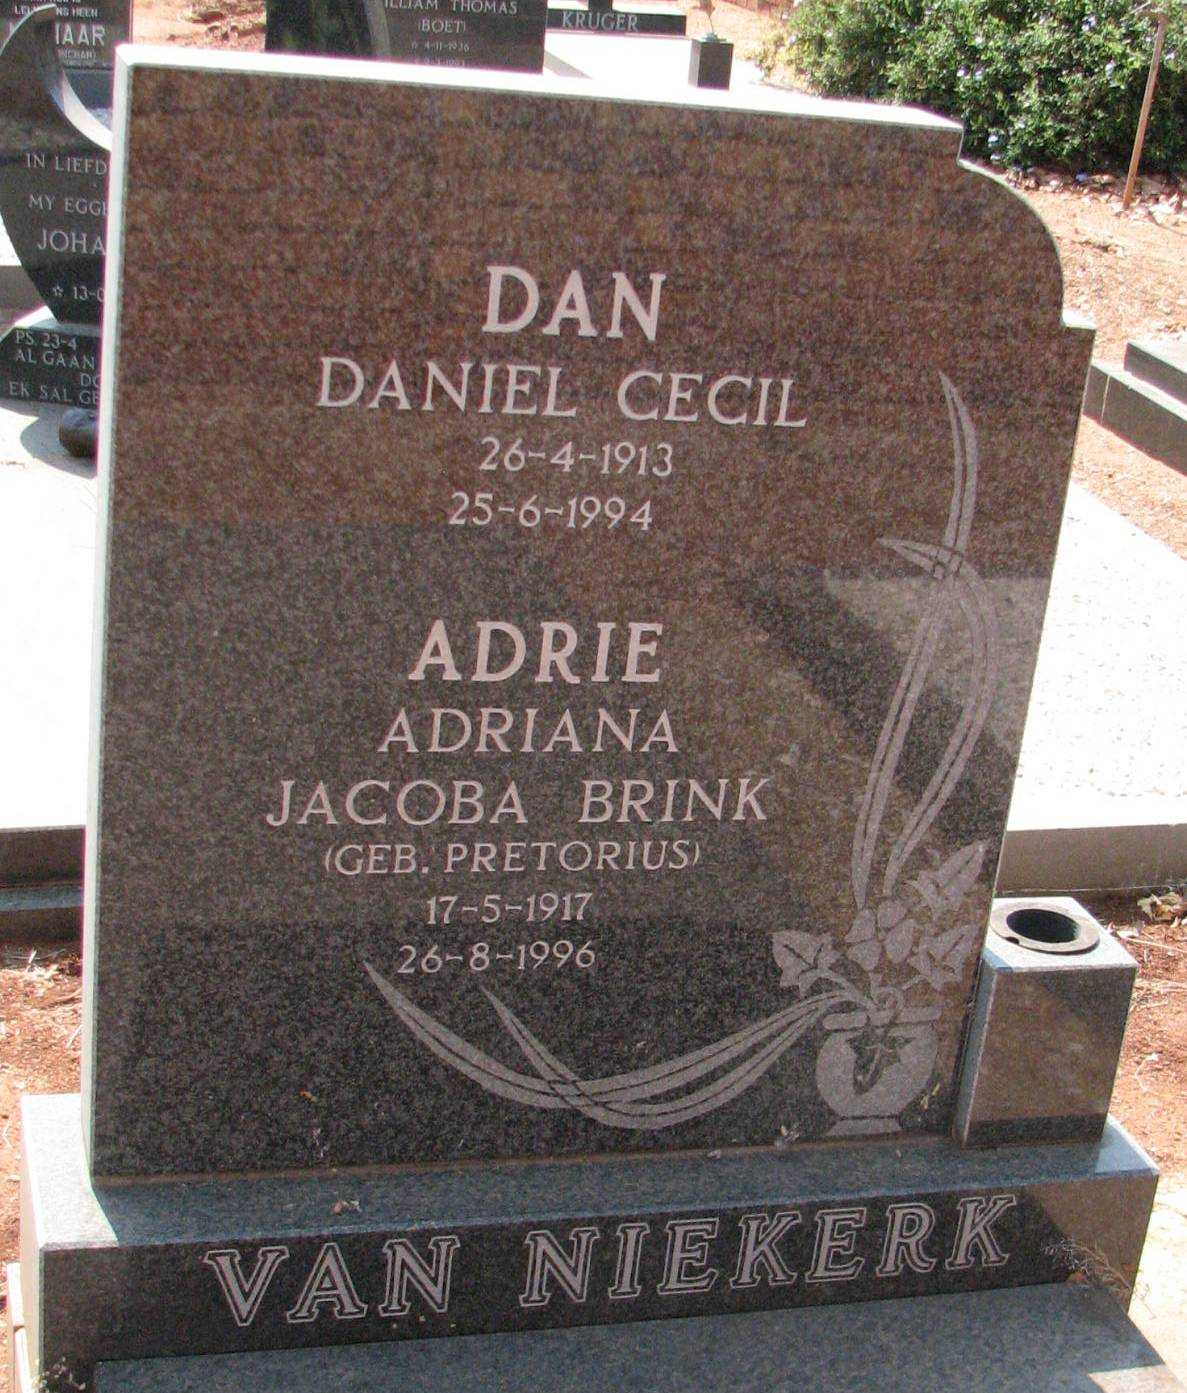 NIEKERK Daniel Cecil, van 1913-1994 & Adriana Jacoba Brink PRETORIUS 1917-1996